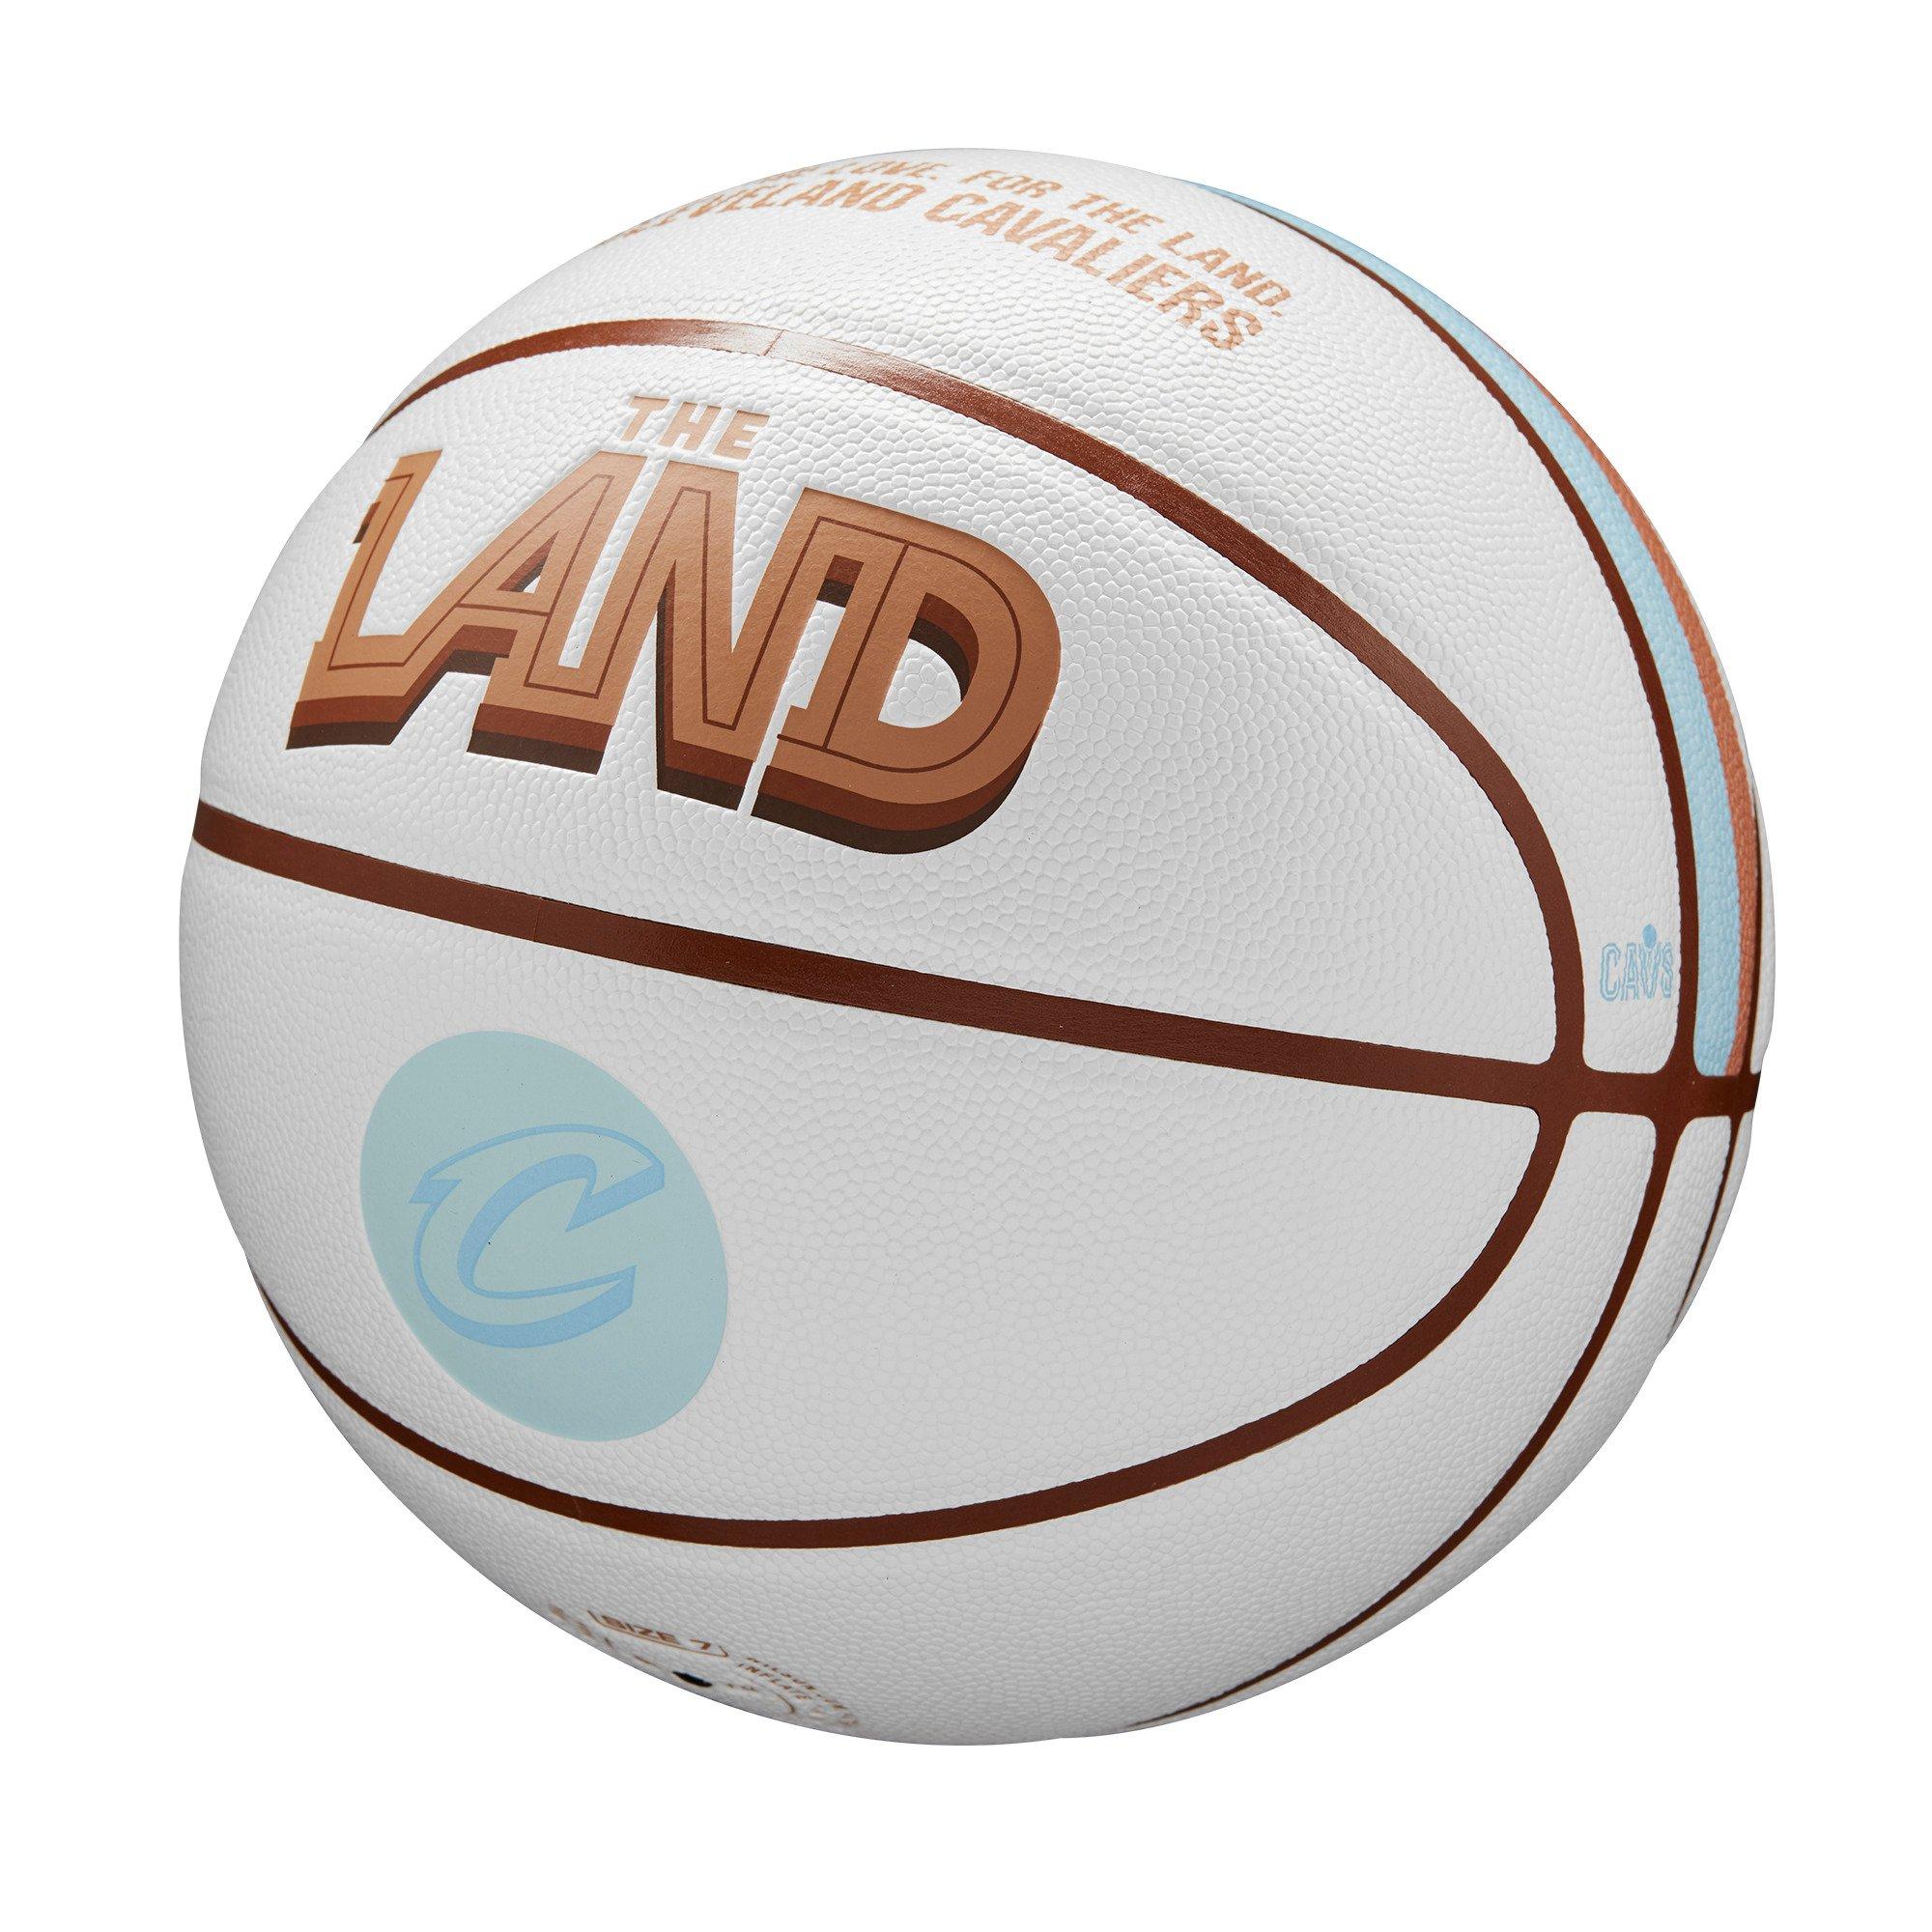 Lander - Ref: 83504 - Bola Spalding Cleveland Cavaliers